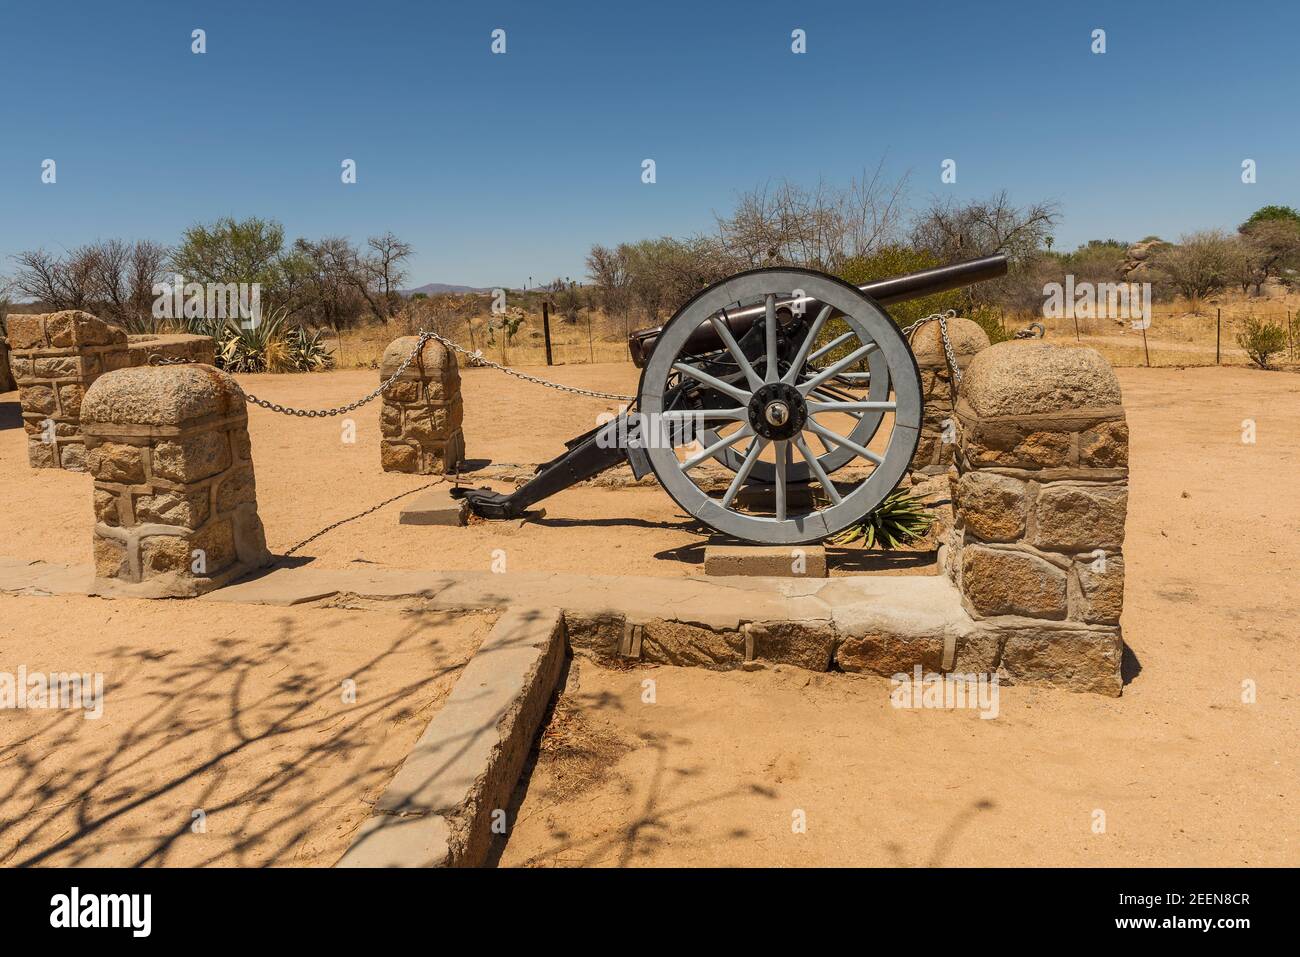 historic cannon in front of the Franke Tower, Franketurm, in Omaruru, Namibia Stock Photo